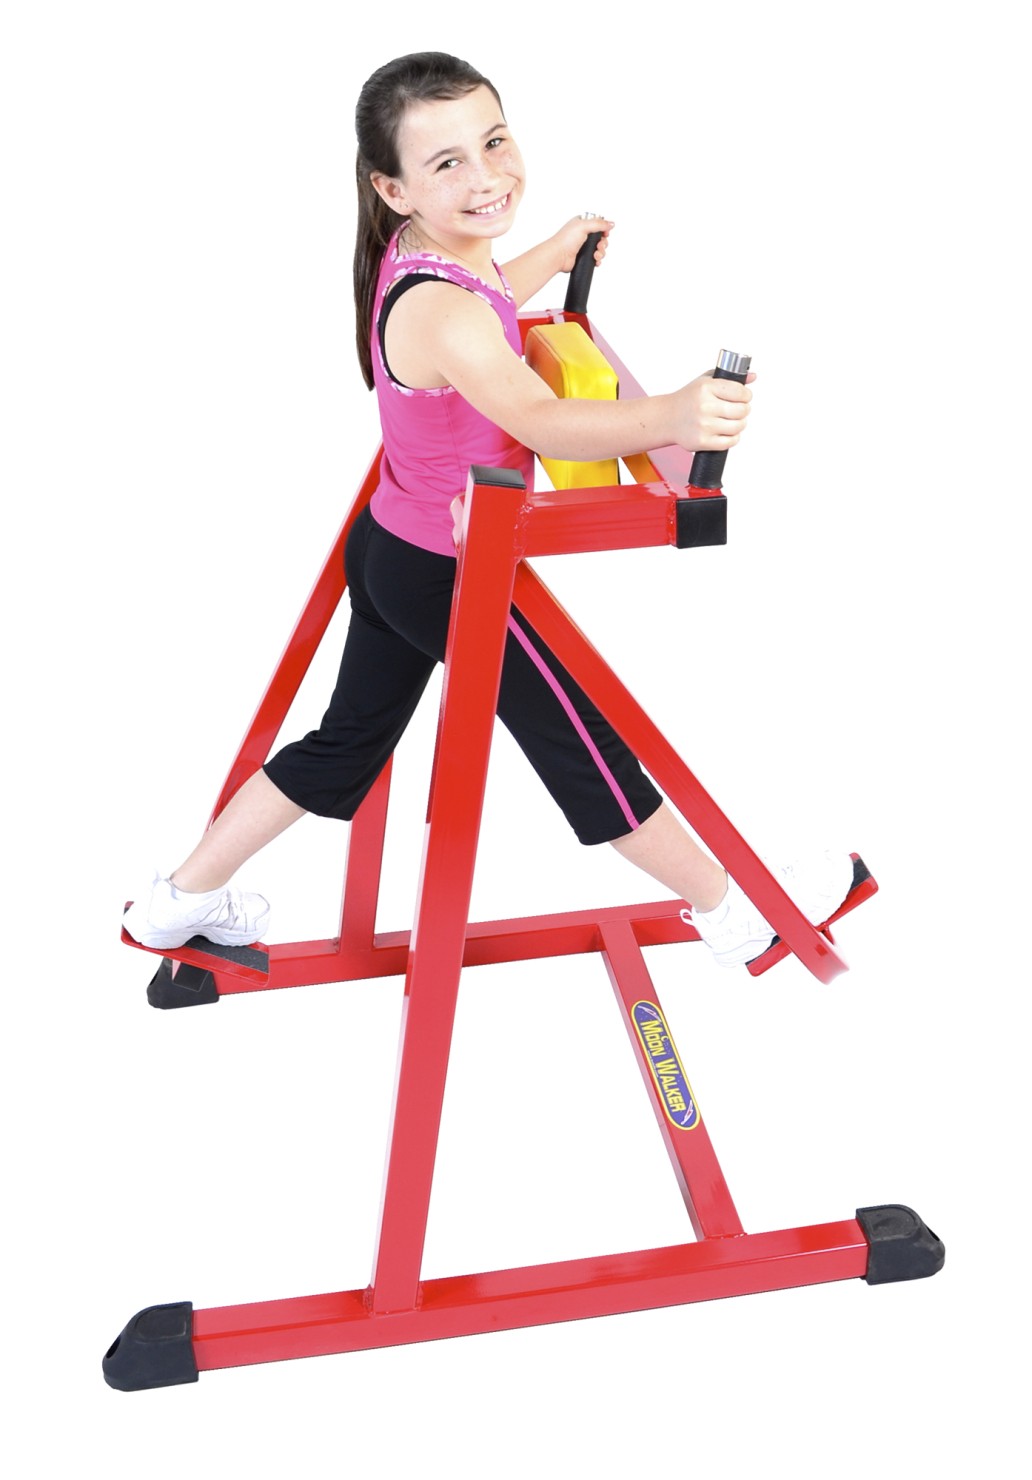 Kids fitness equipment